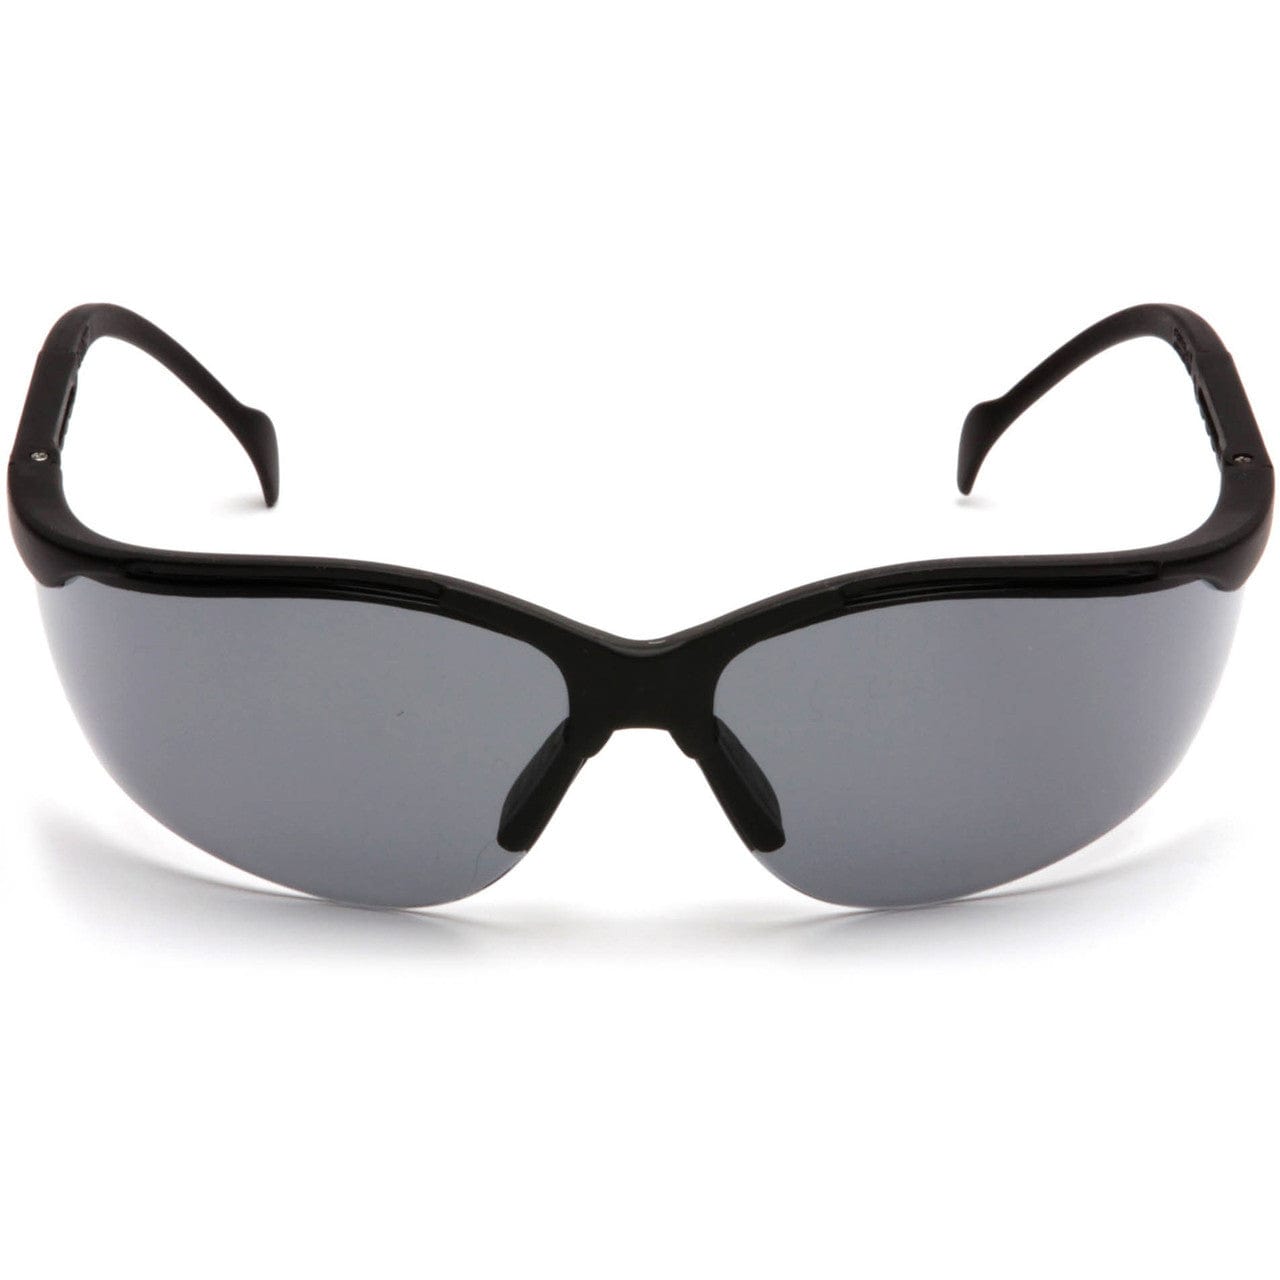 Pyramex Venture 2 Safety Glasses Black Frame Gray Anti-Fog Lens SB1820ST Front View